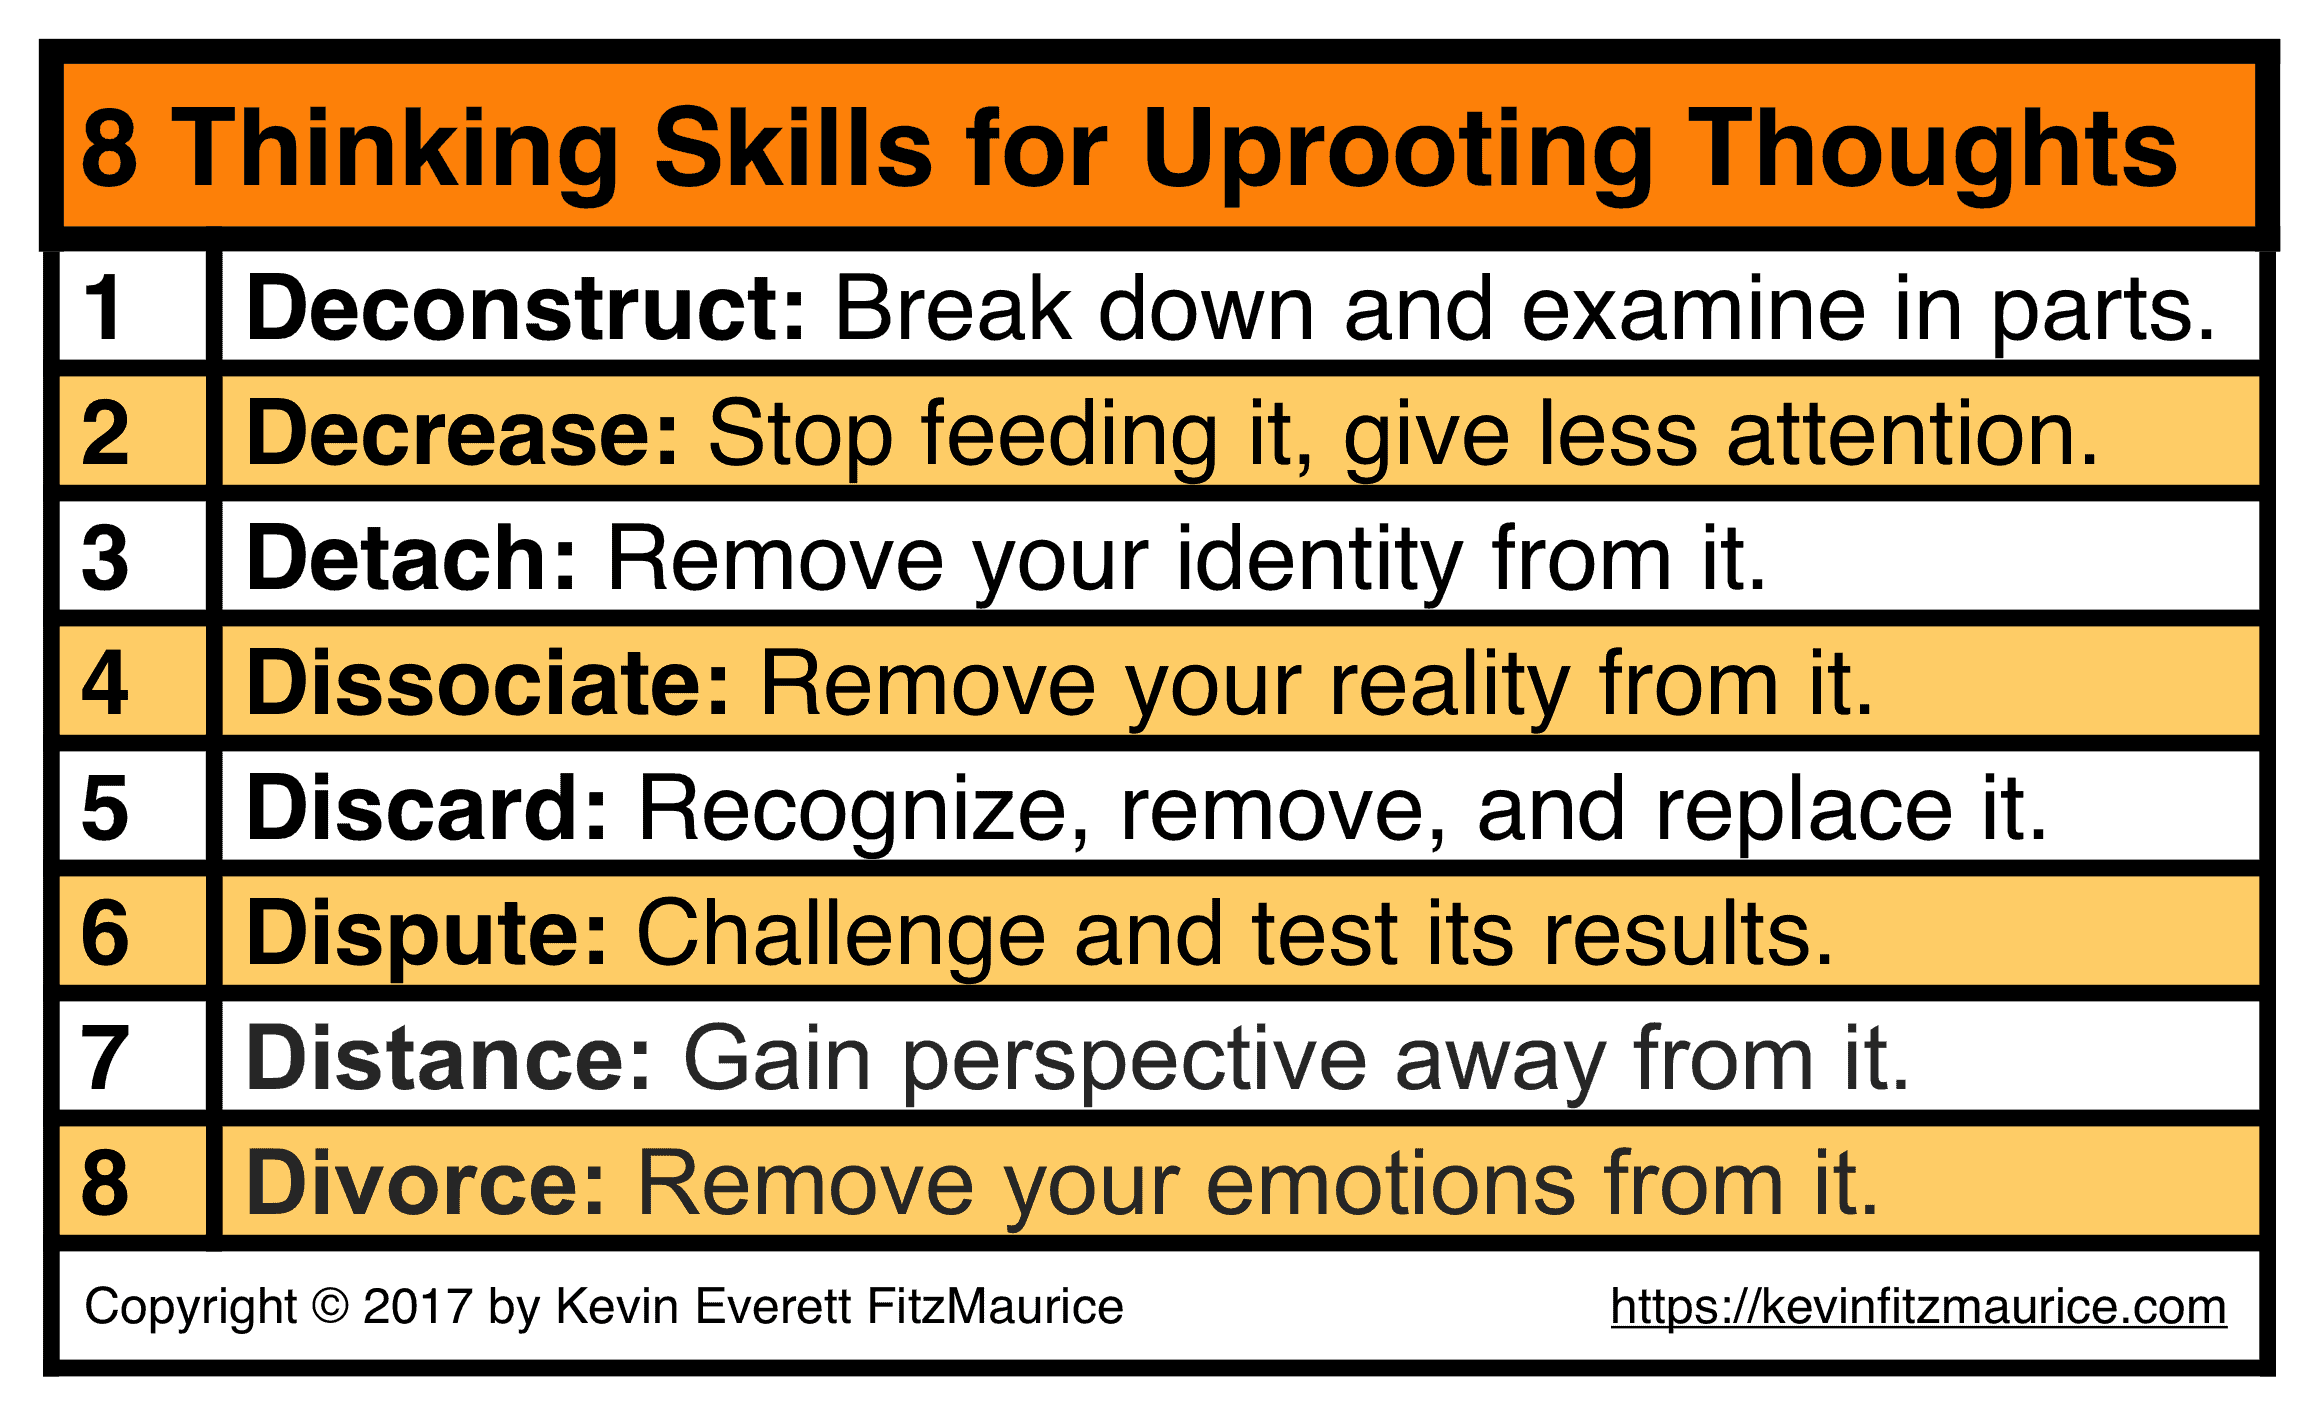 8 Thinking Skills for Detaching